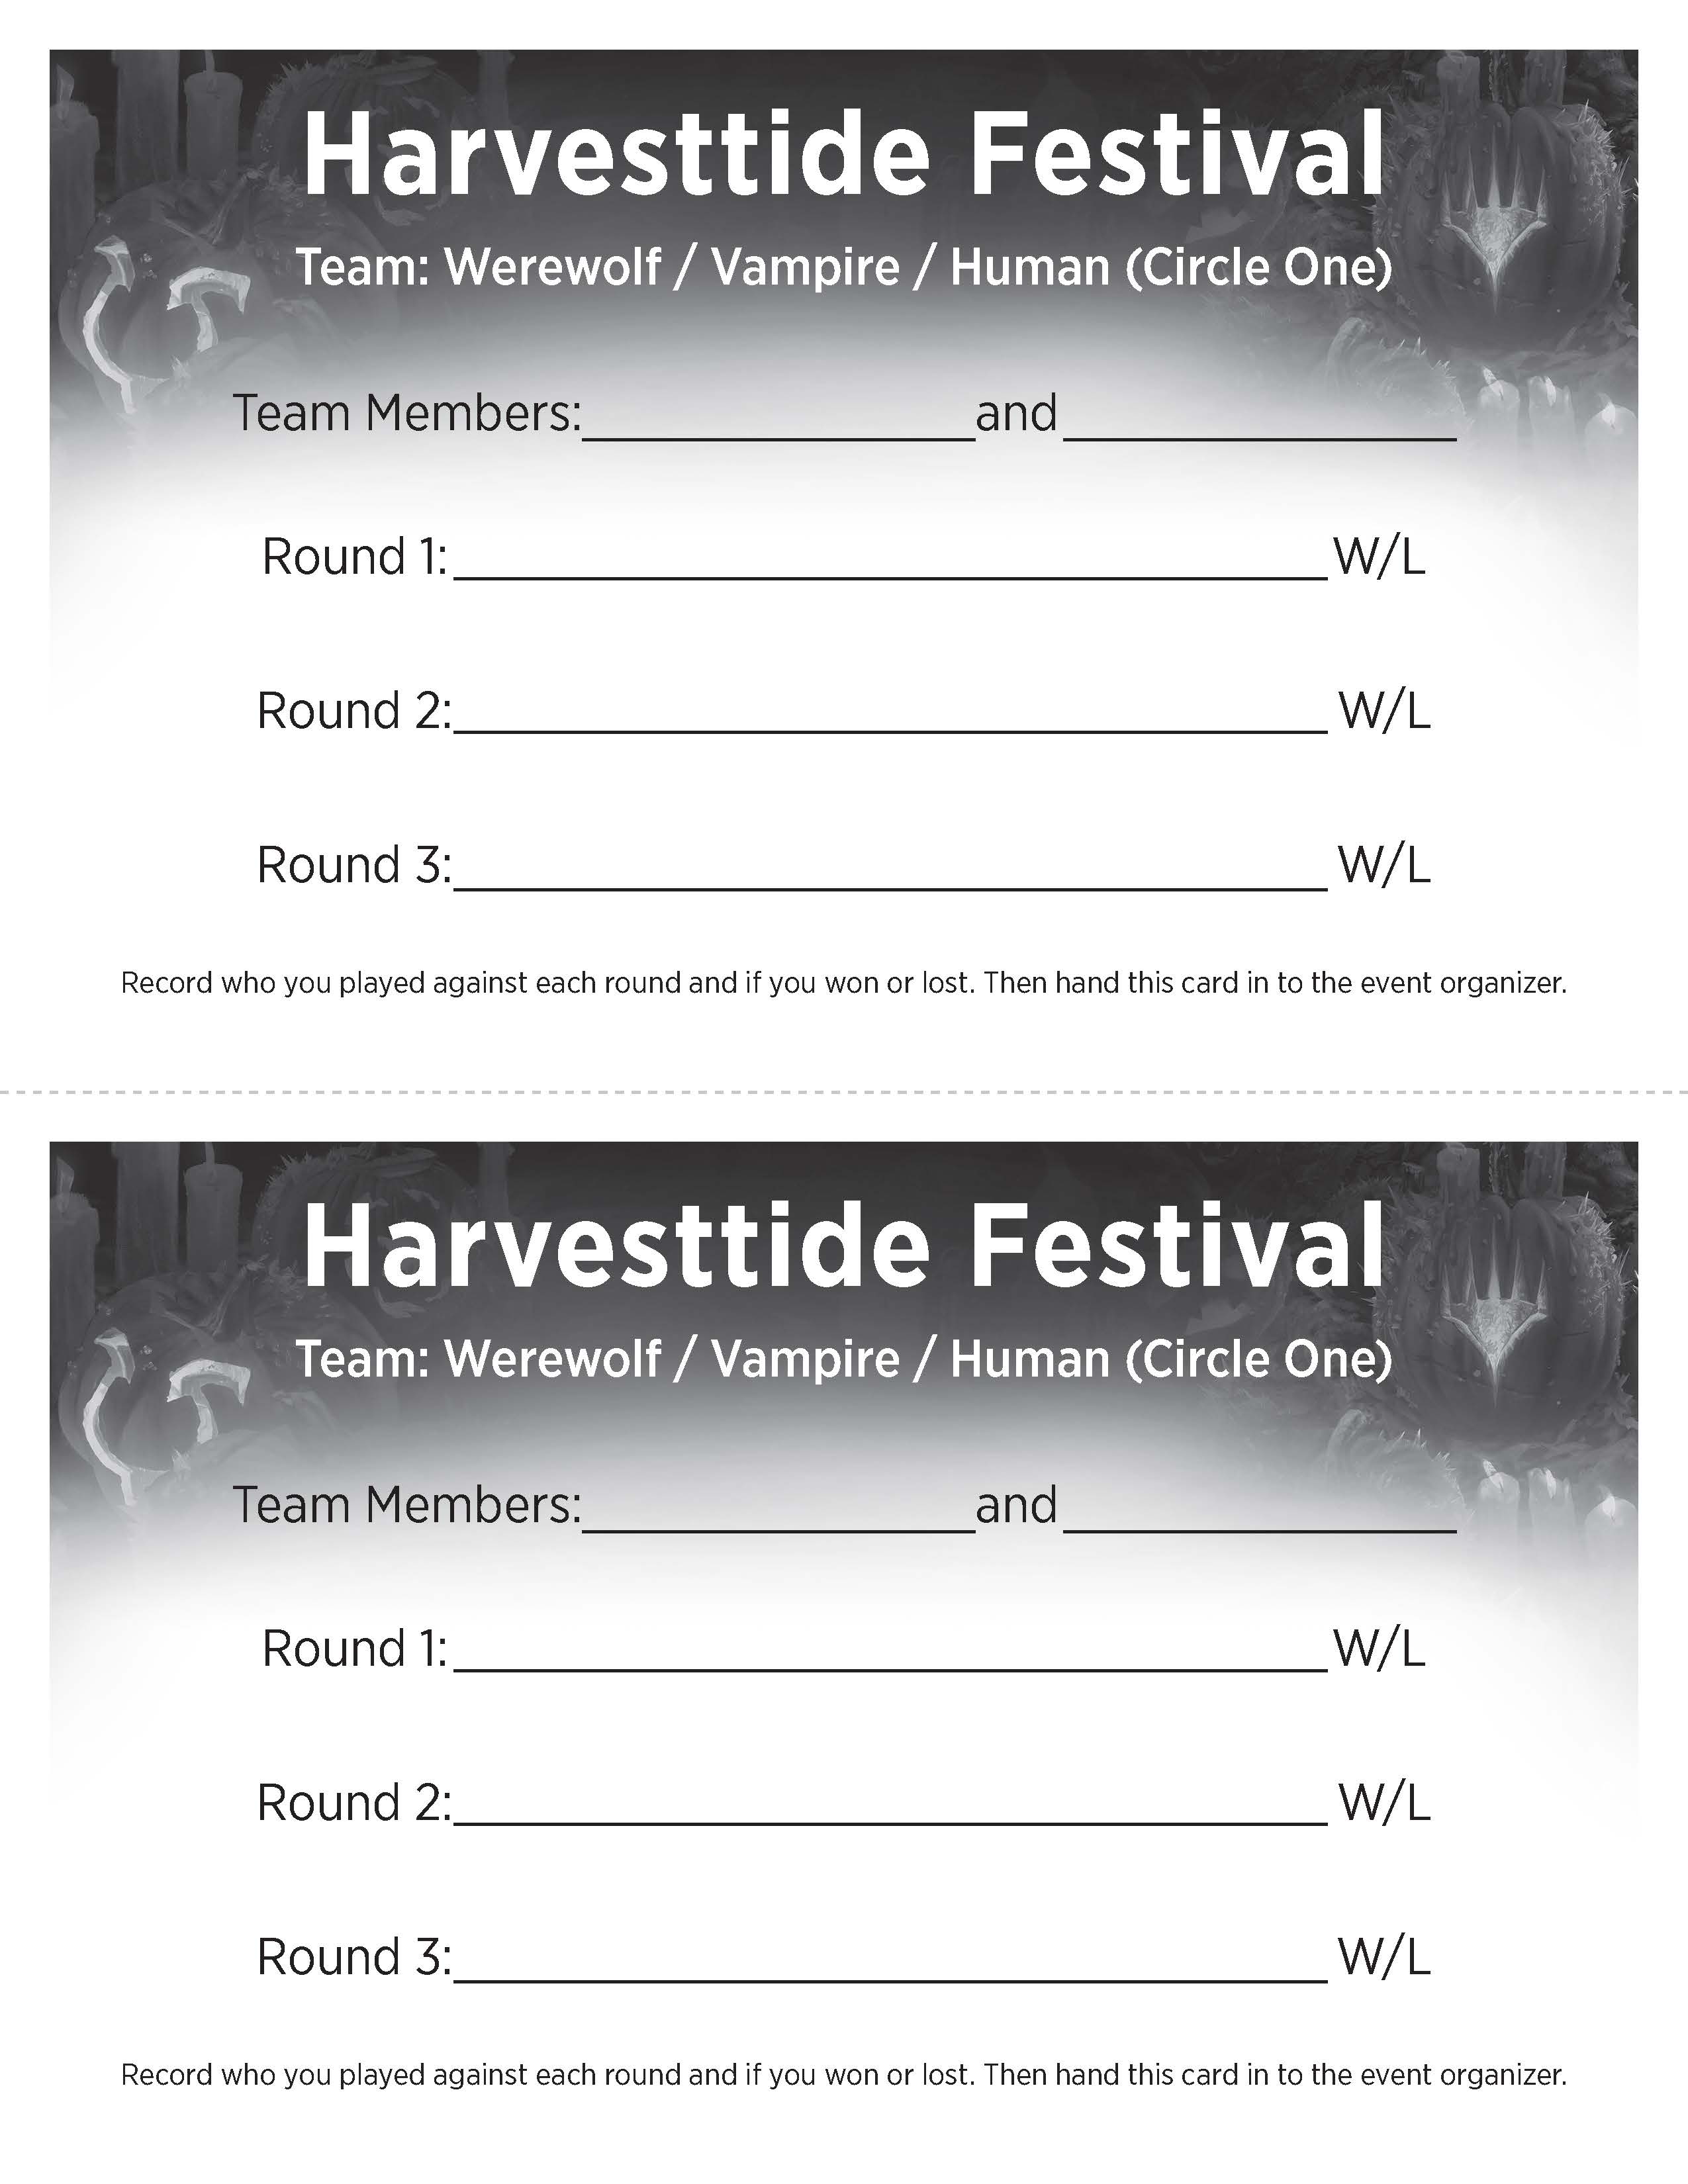 Harvesttide Festival dance match card